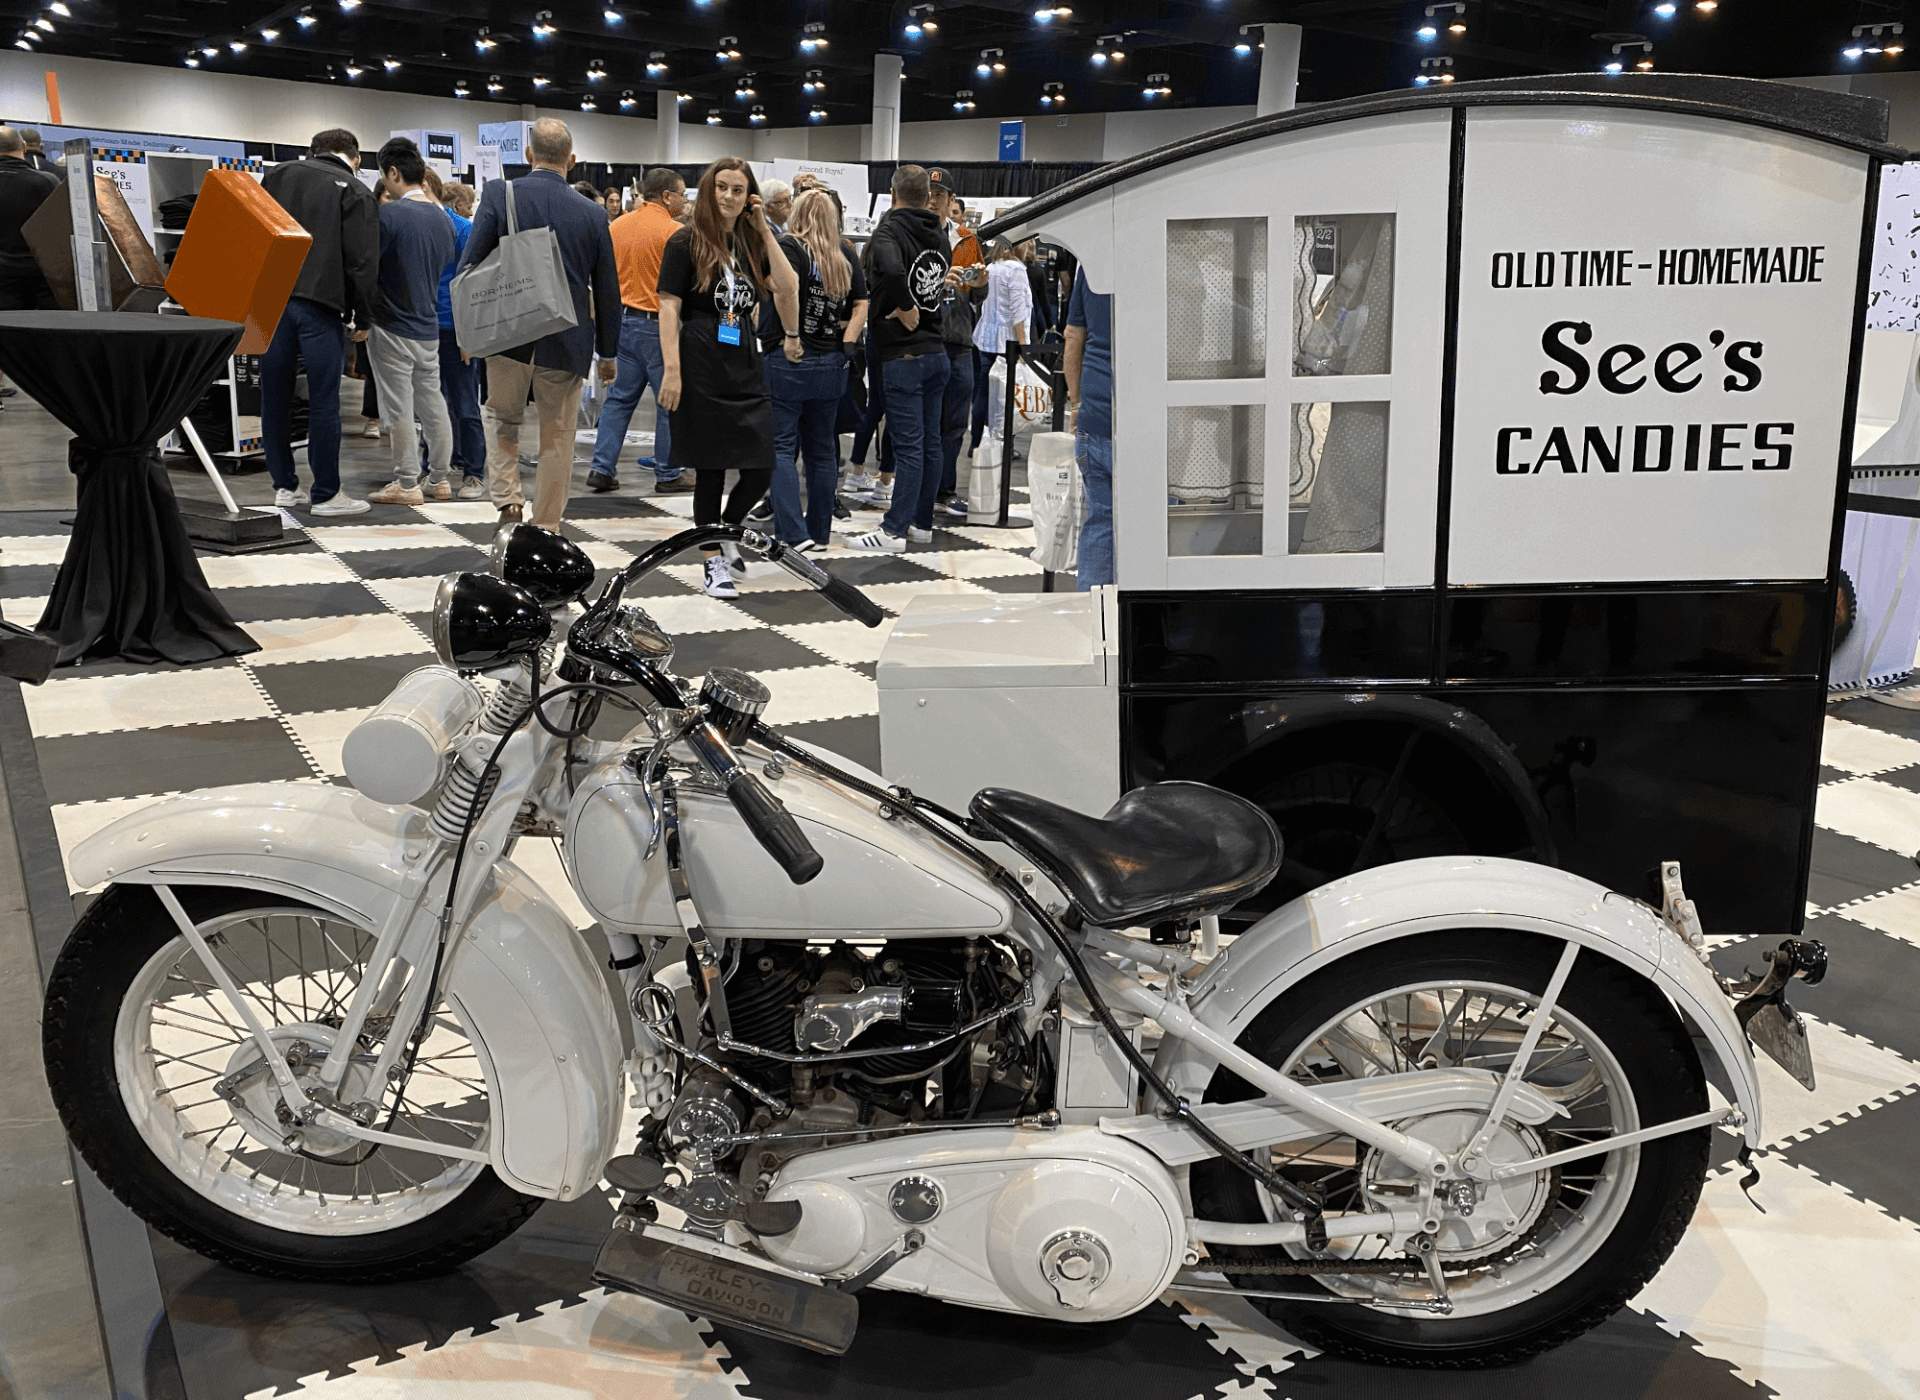 See's Candies motorcycle at the Berkshire Bazaar of Bargains 2022